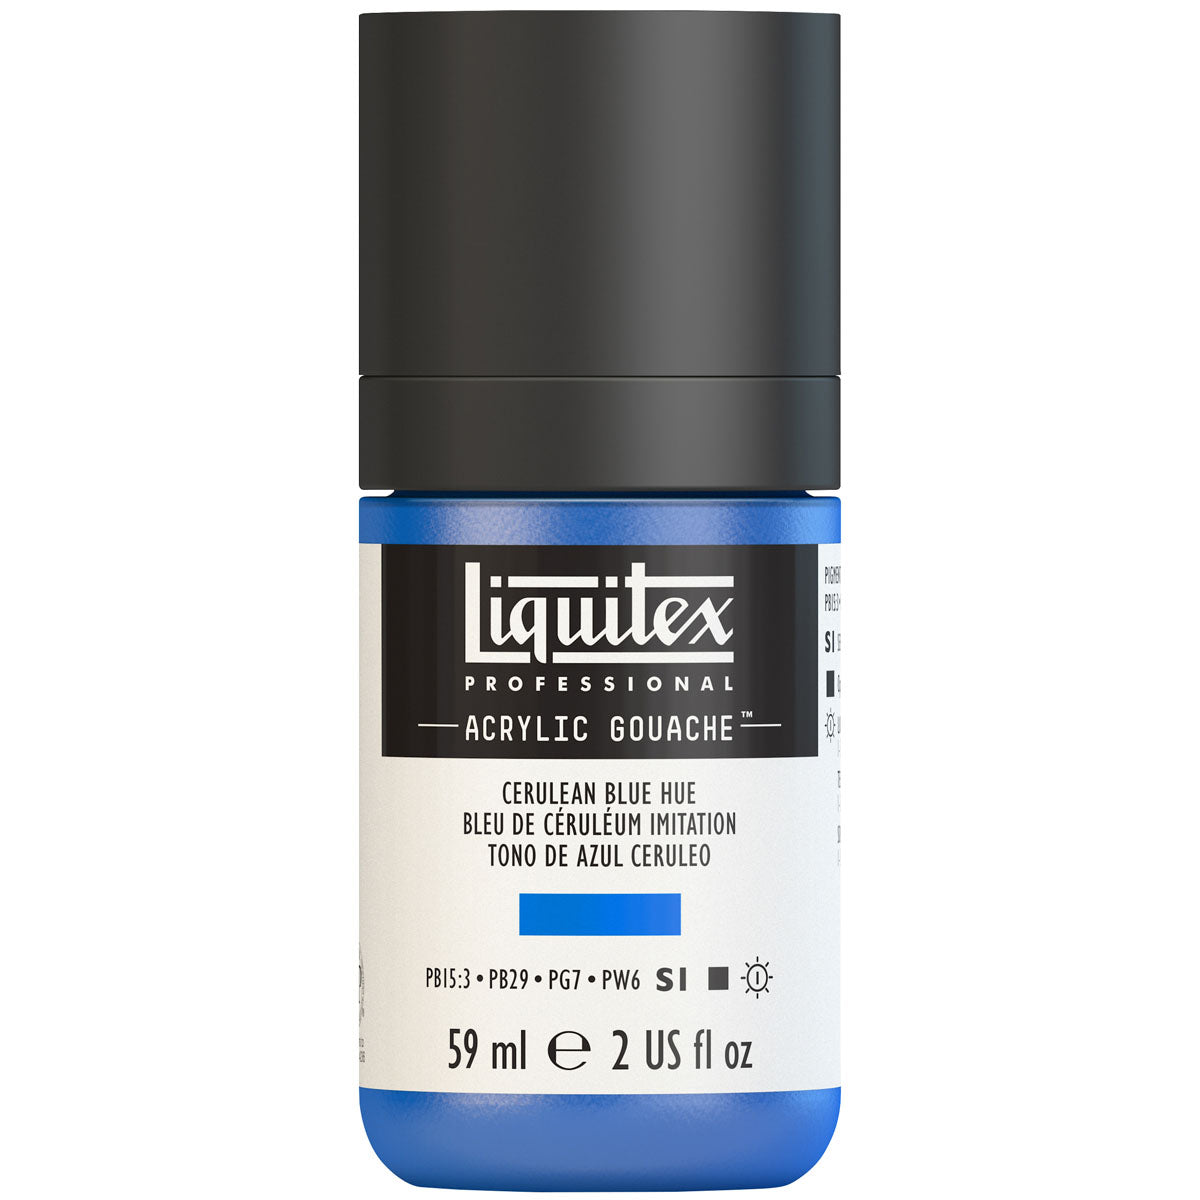 Liquitex - Acrylic Gouache 59ml S1 - Cerulean Blue Hue